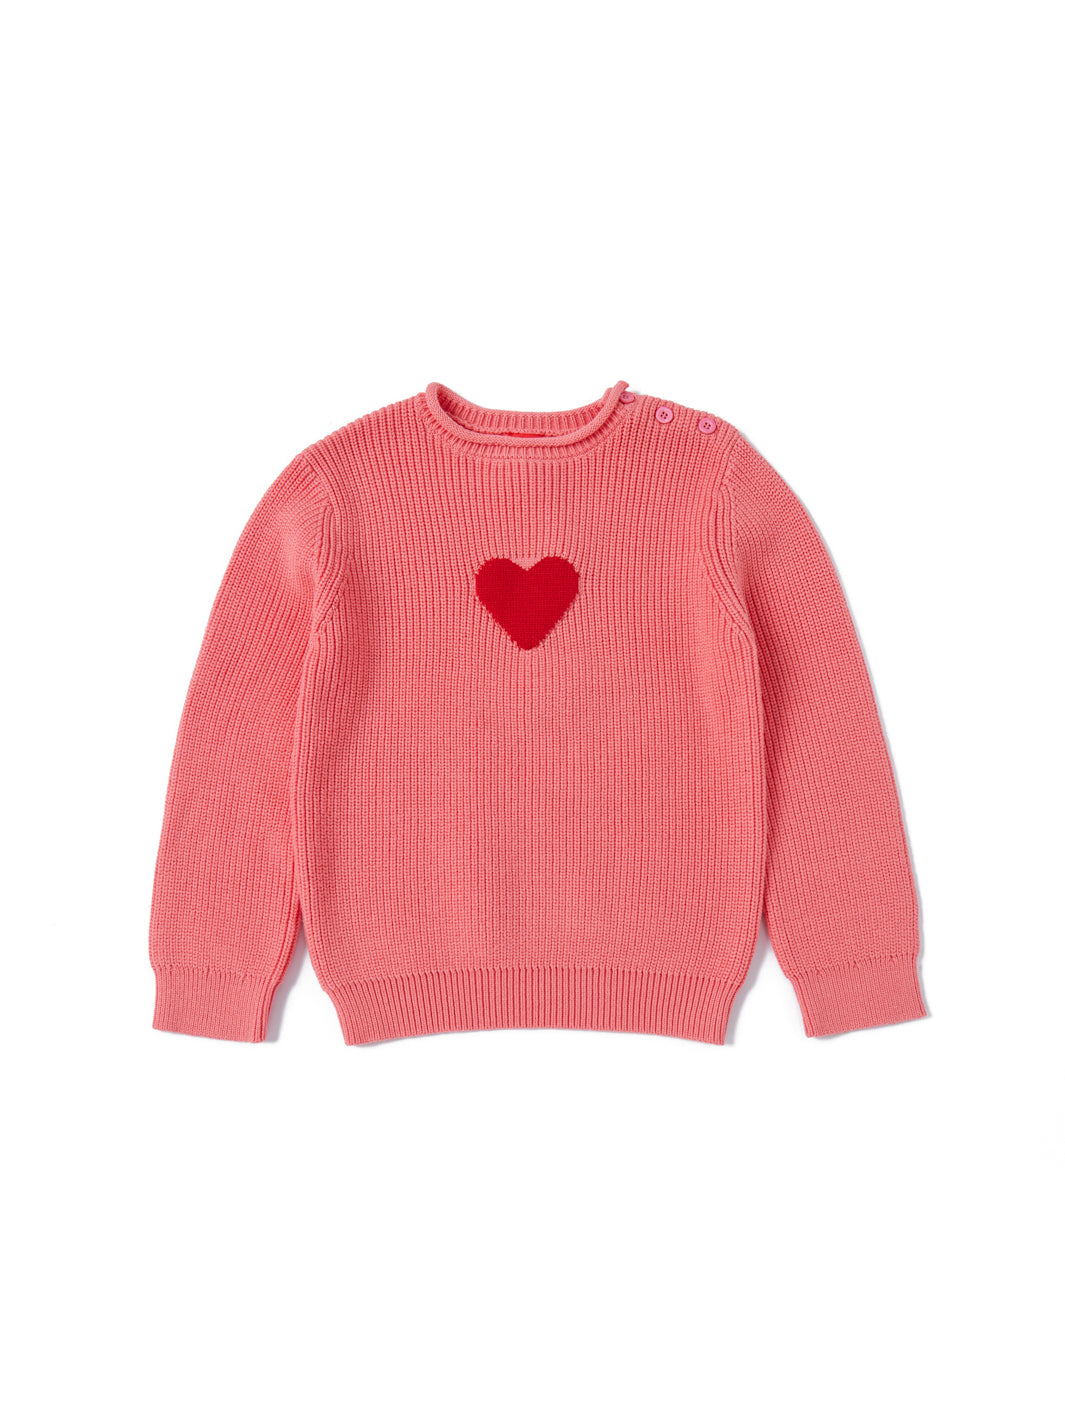 Heart Print Sweater - Watermelon